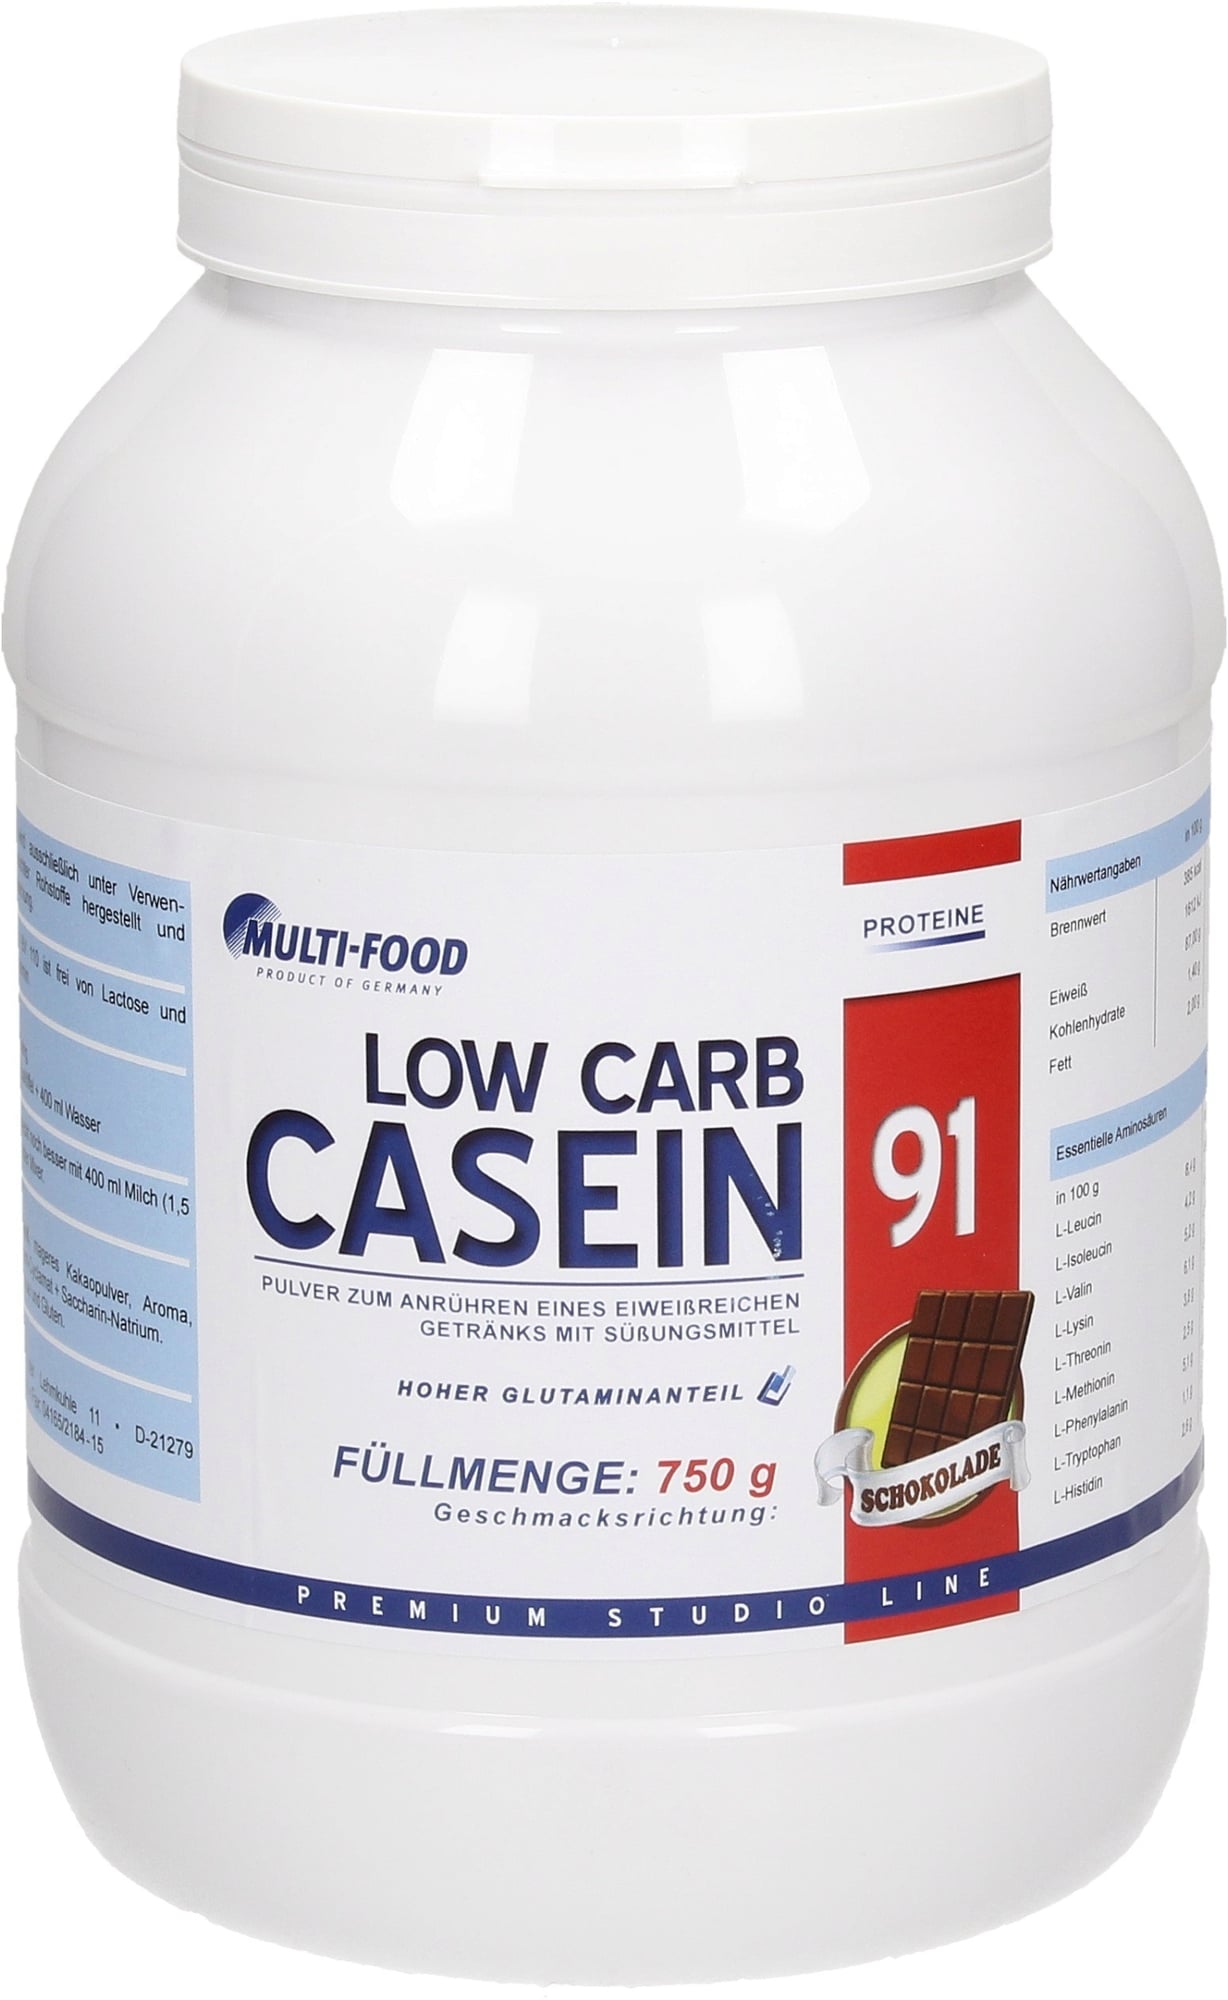 Multi-Food LOW CARB CASEIN 91, 750g Dose - Schoko